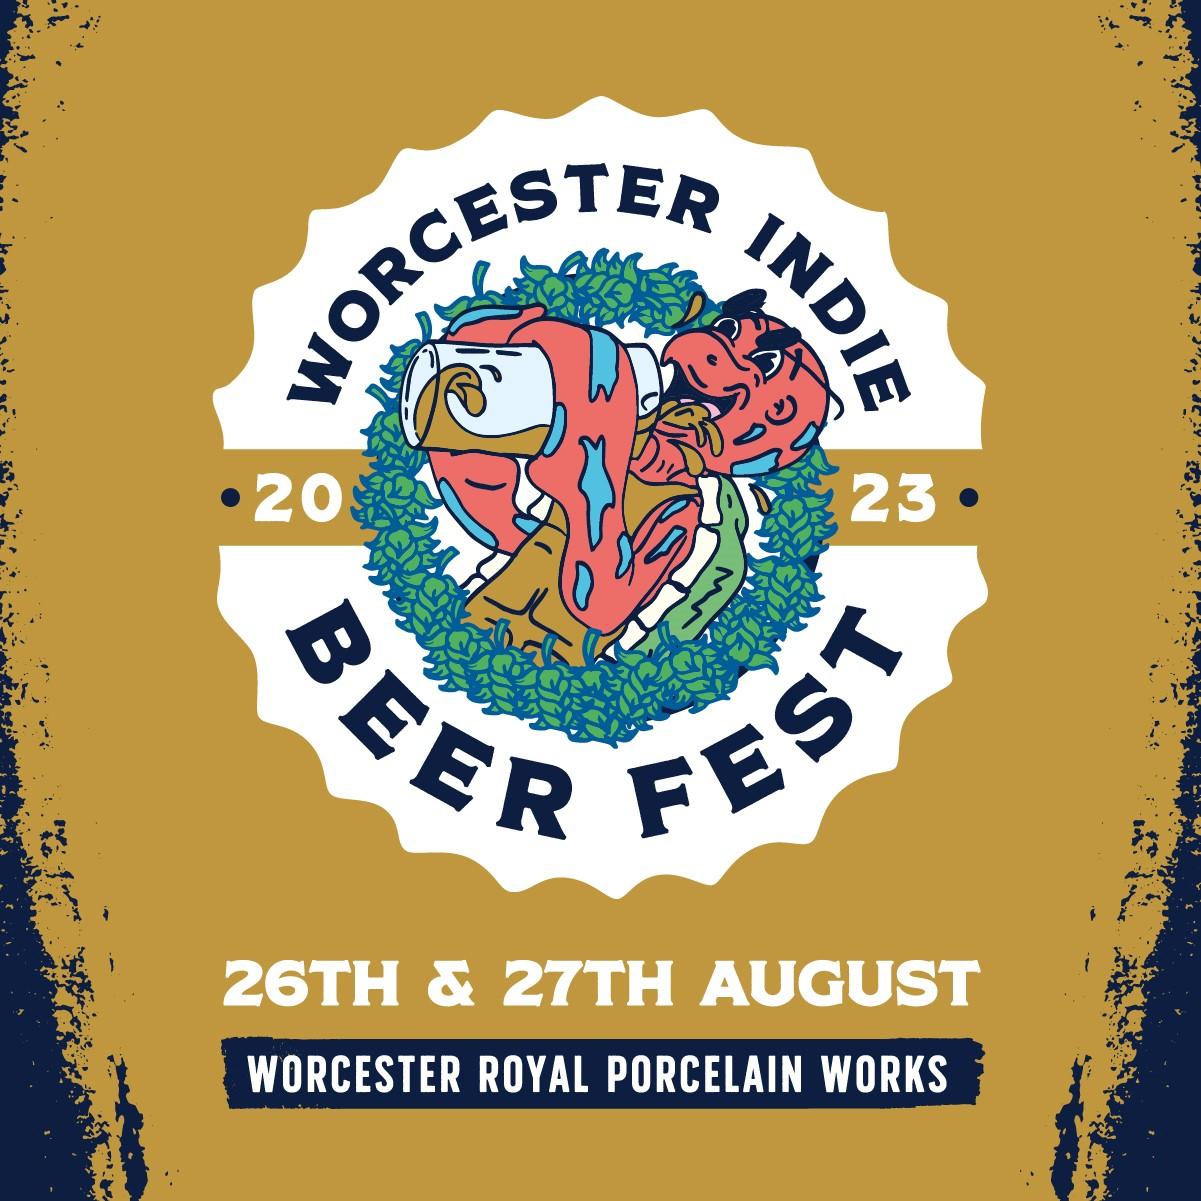 Beer festival poster